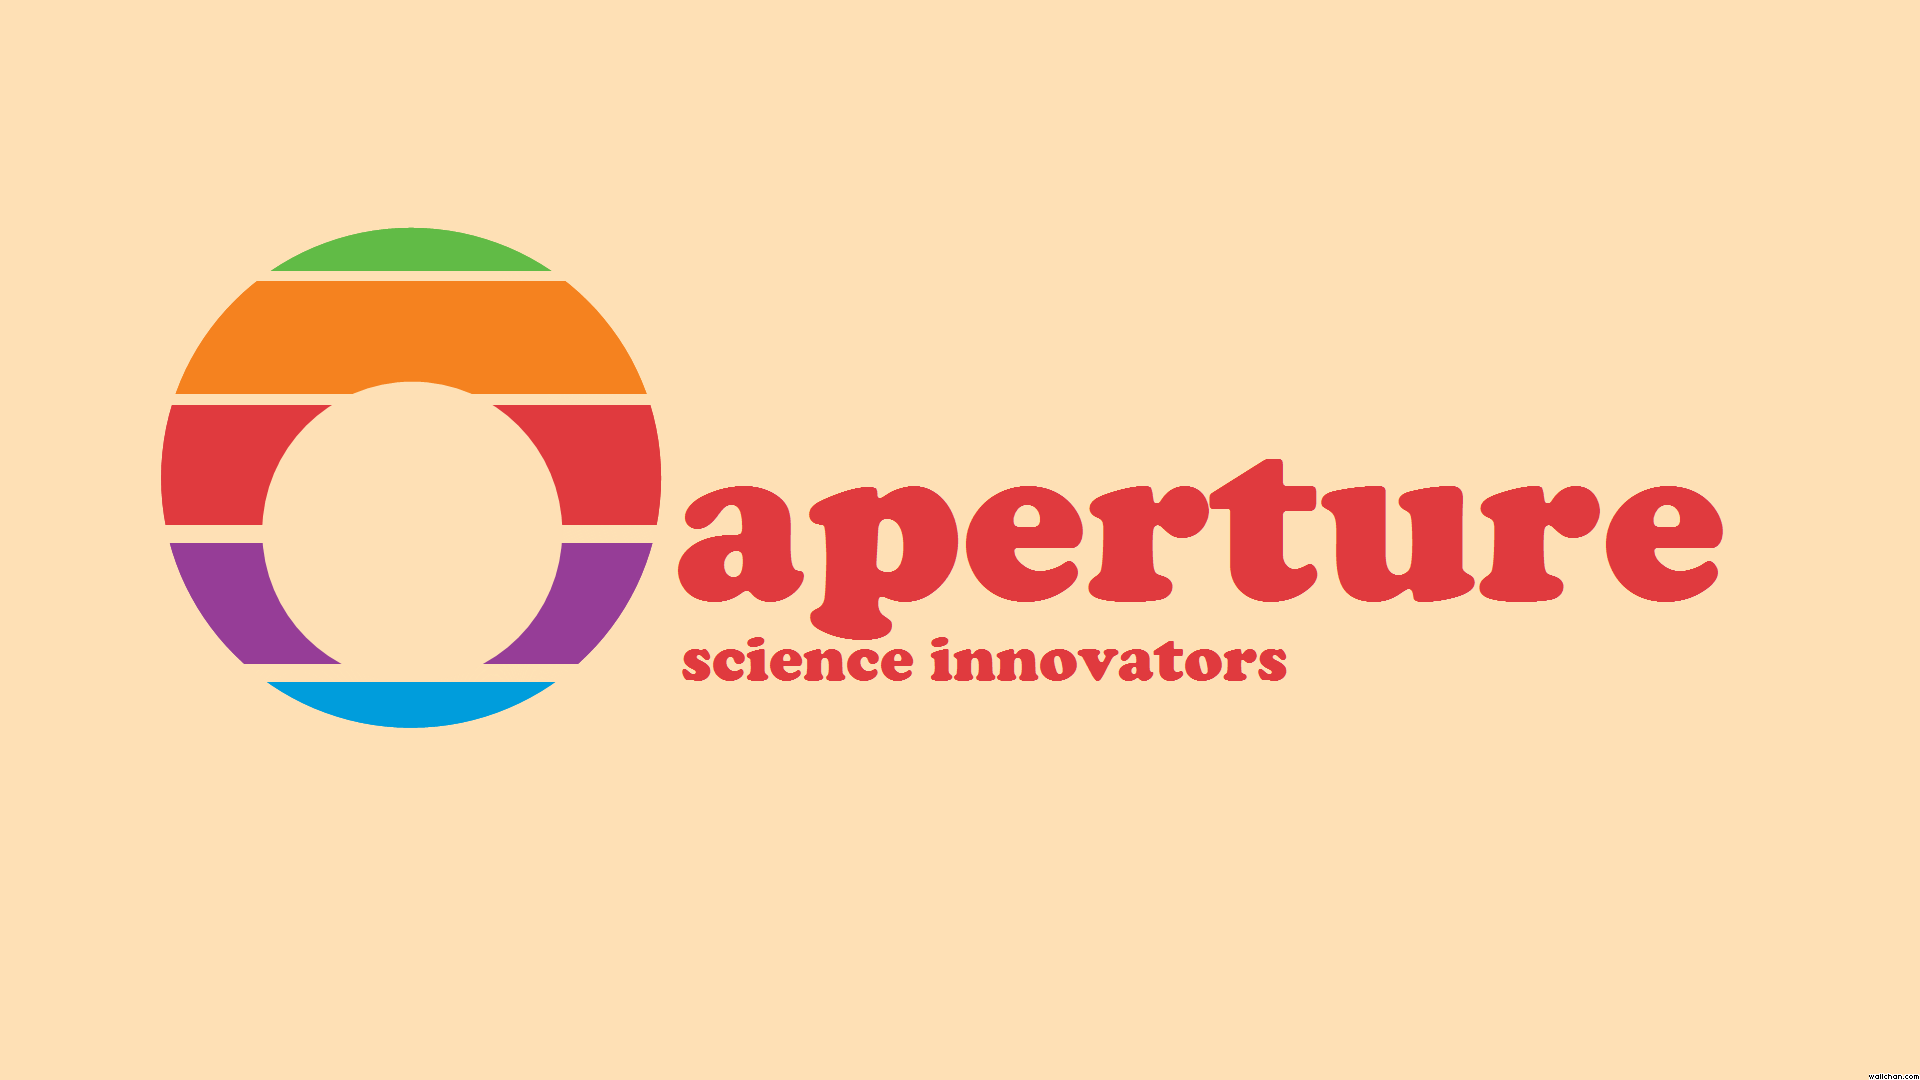 Aperture Science Logo Wallpapers